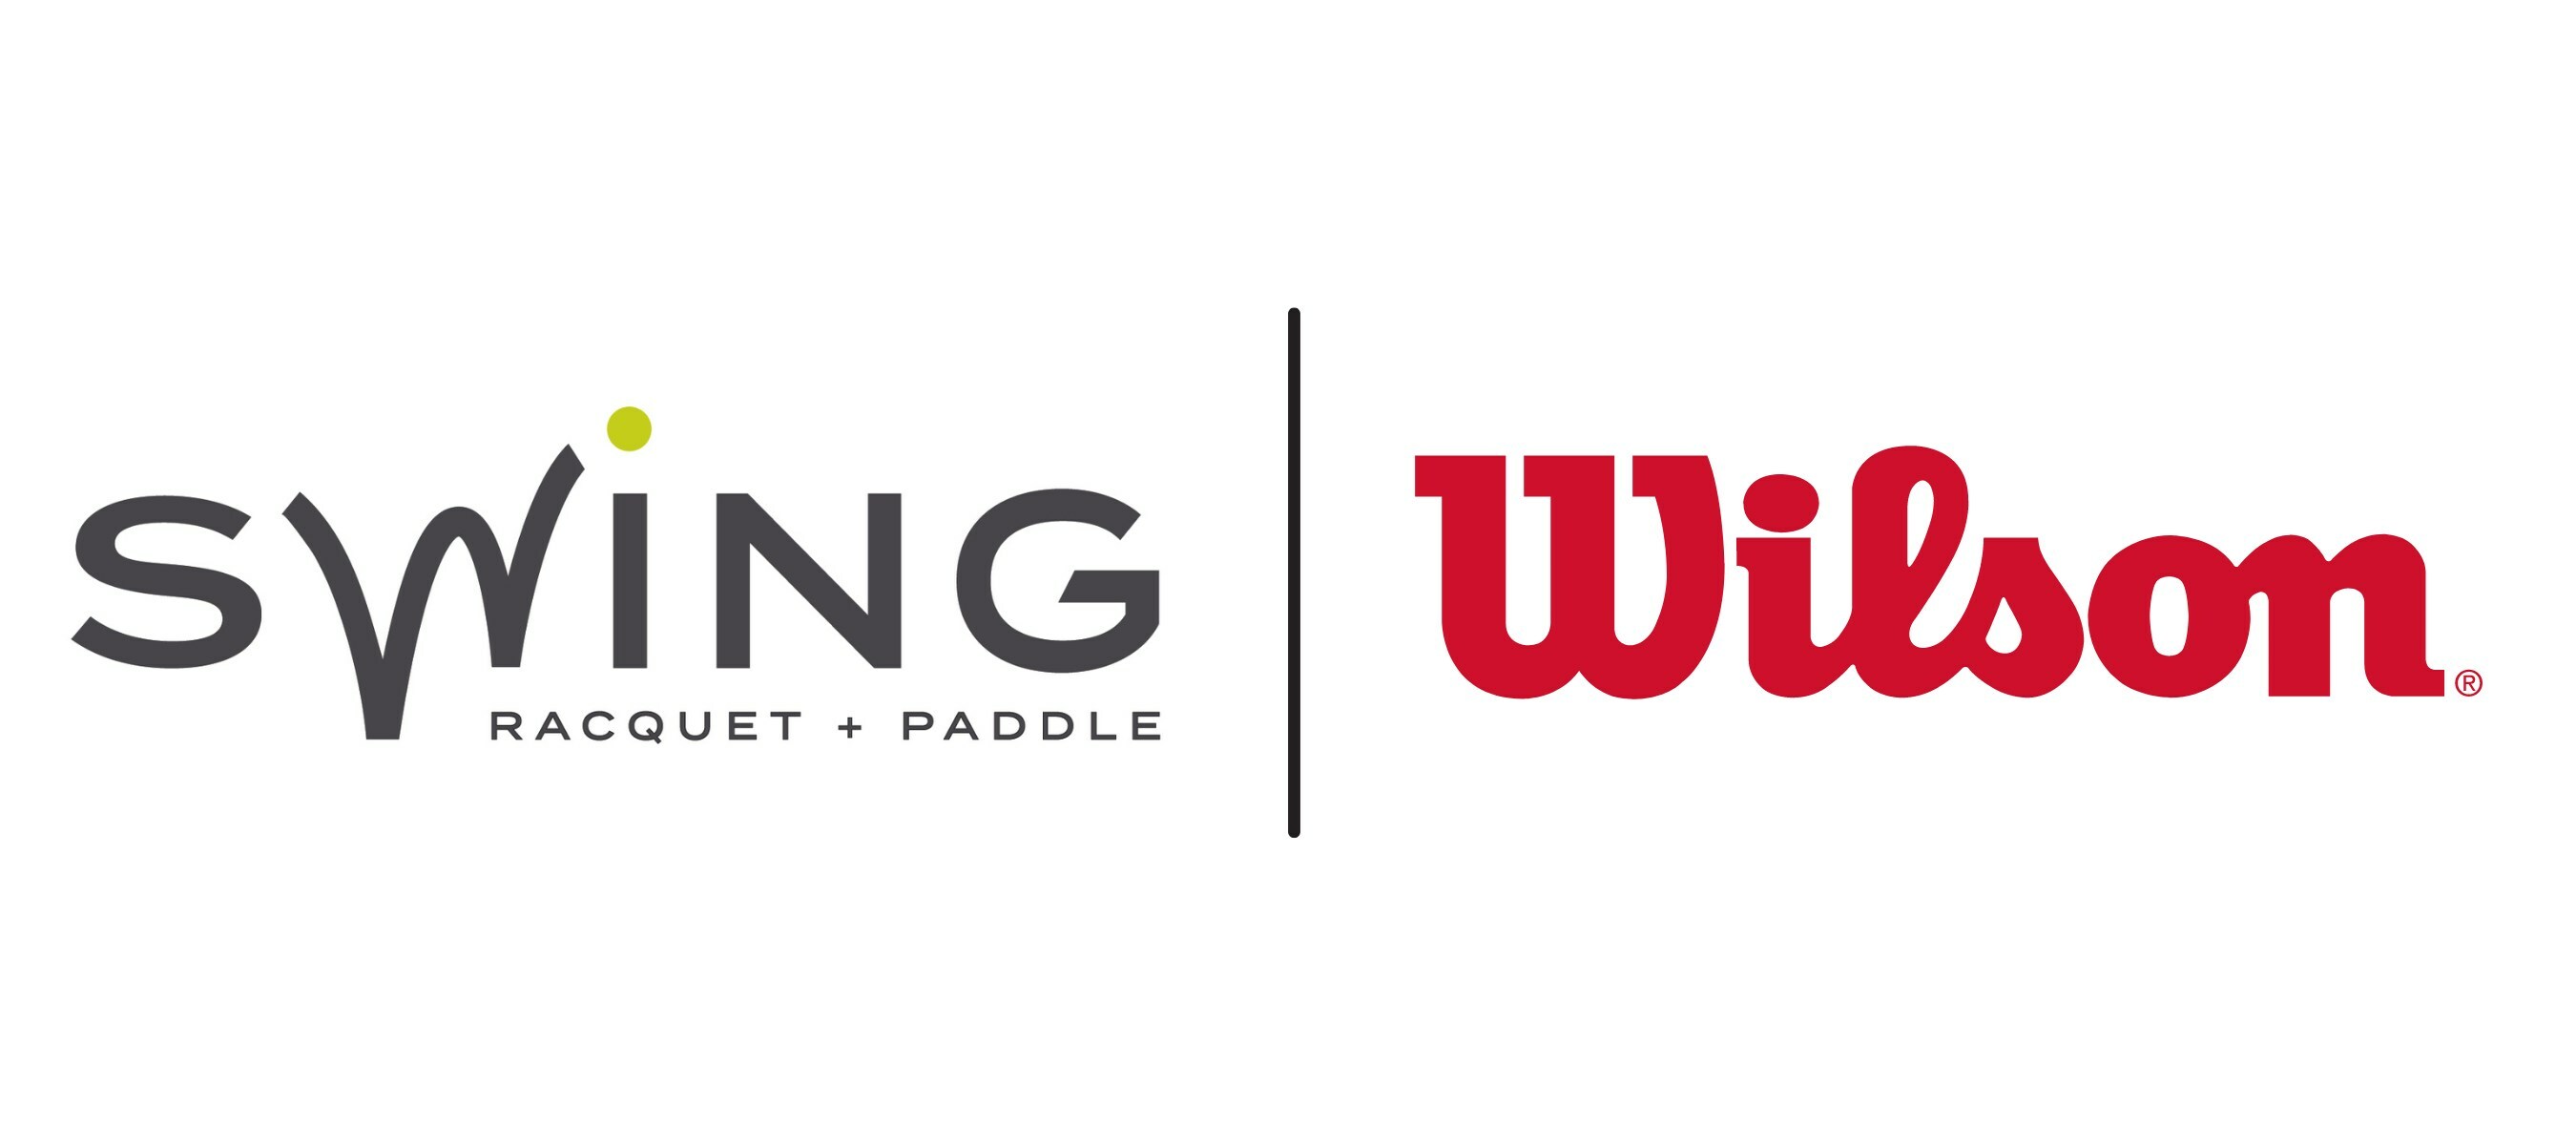 wilson tennis logo